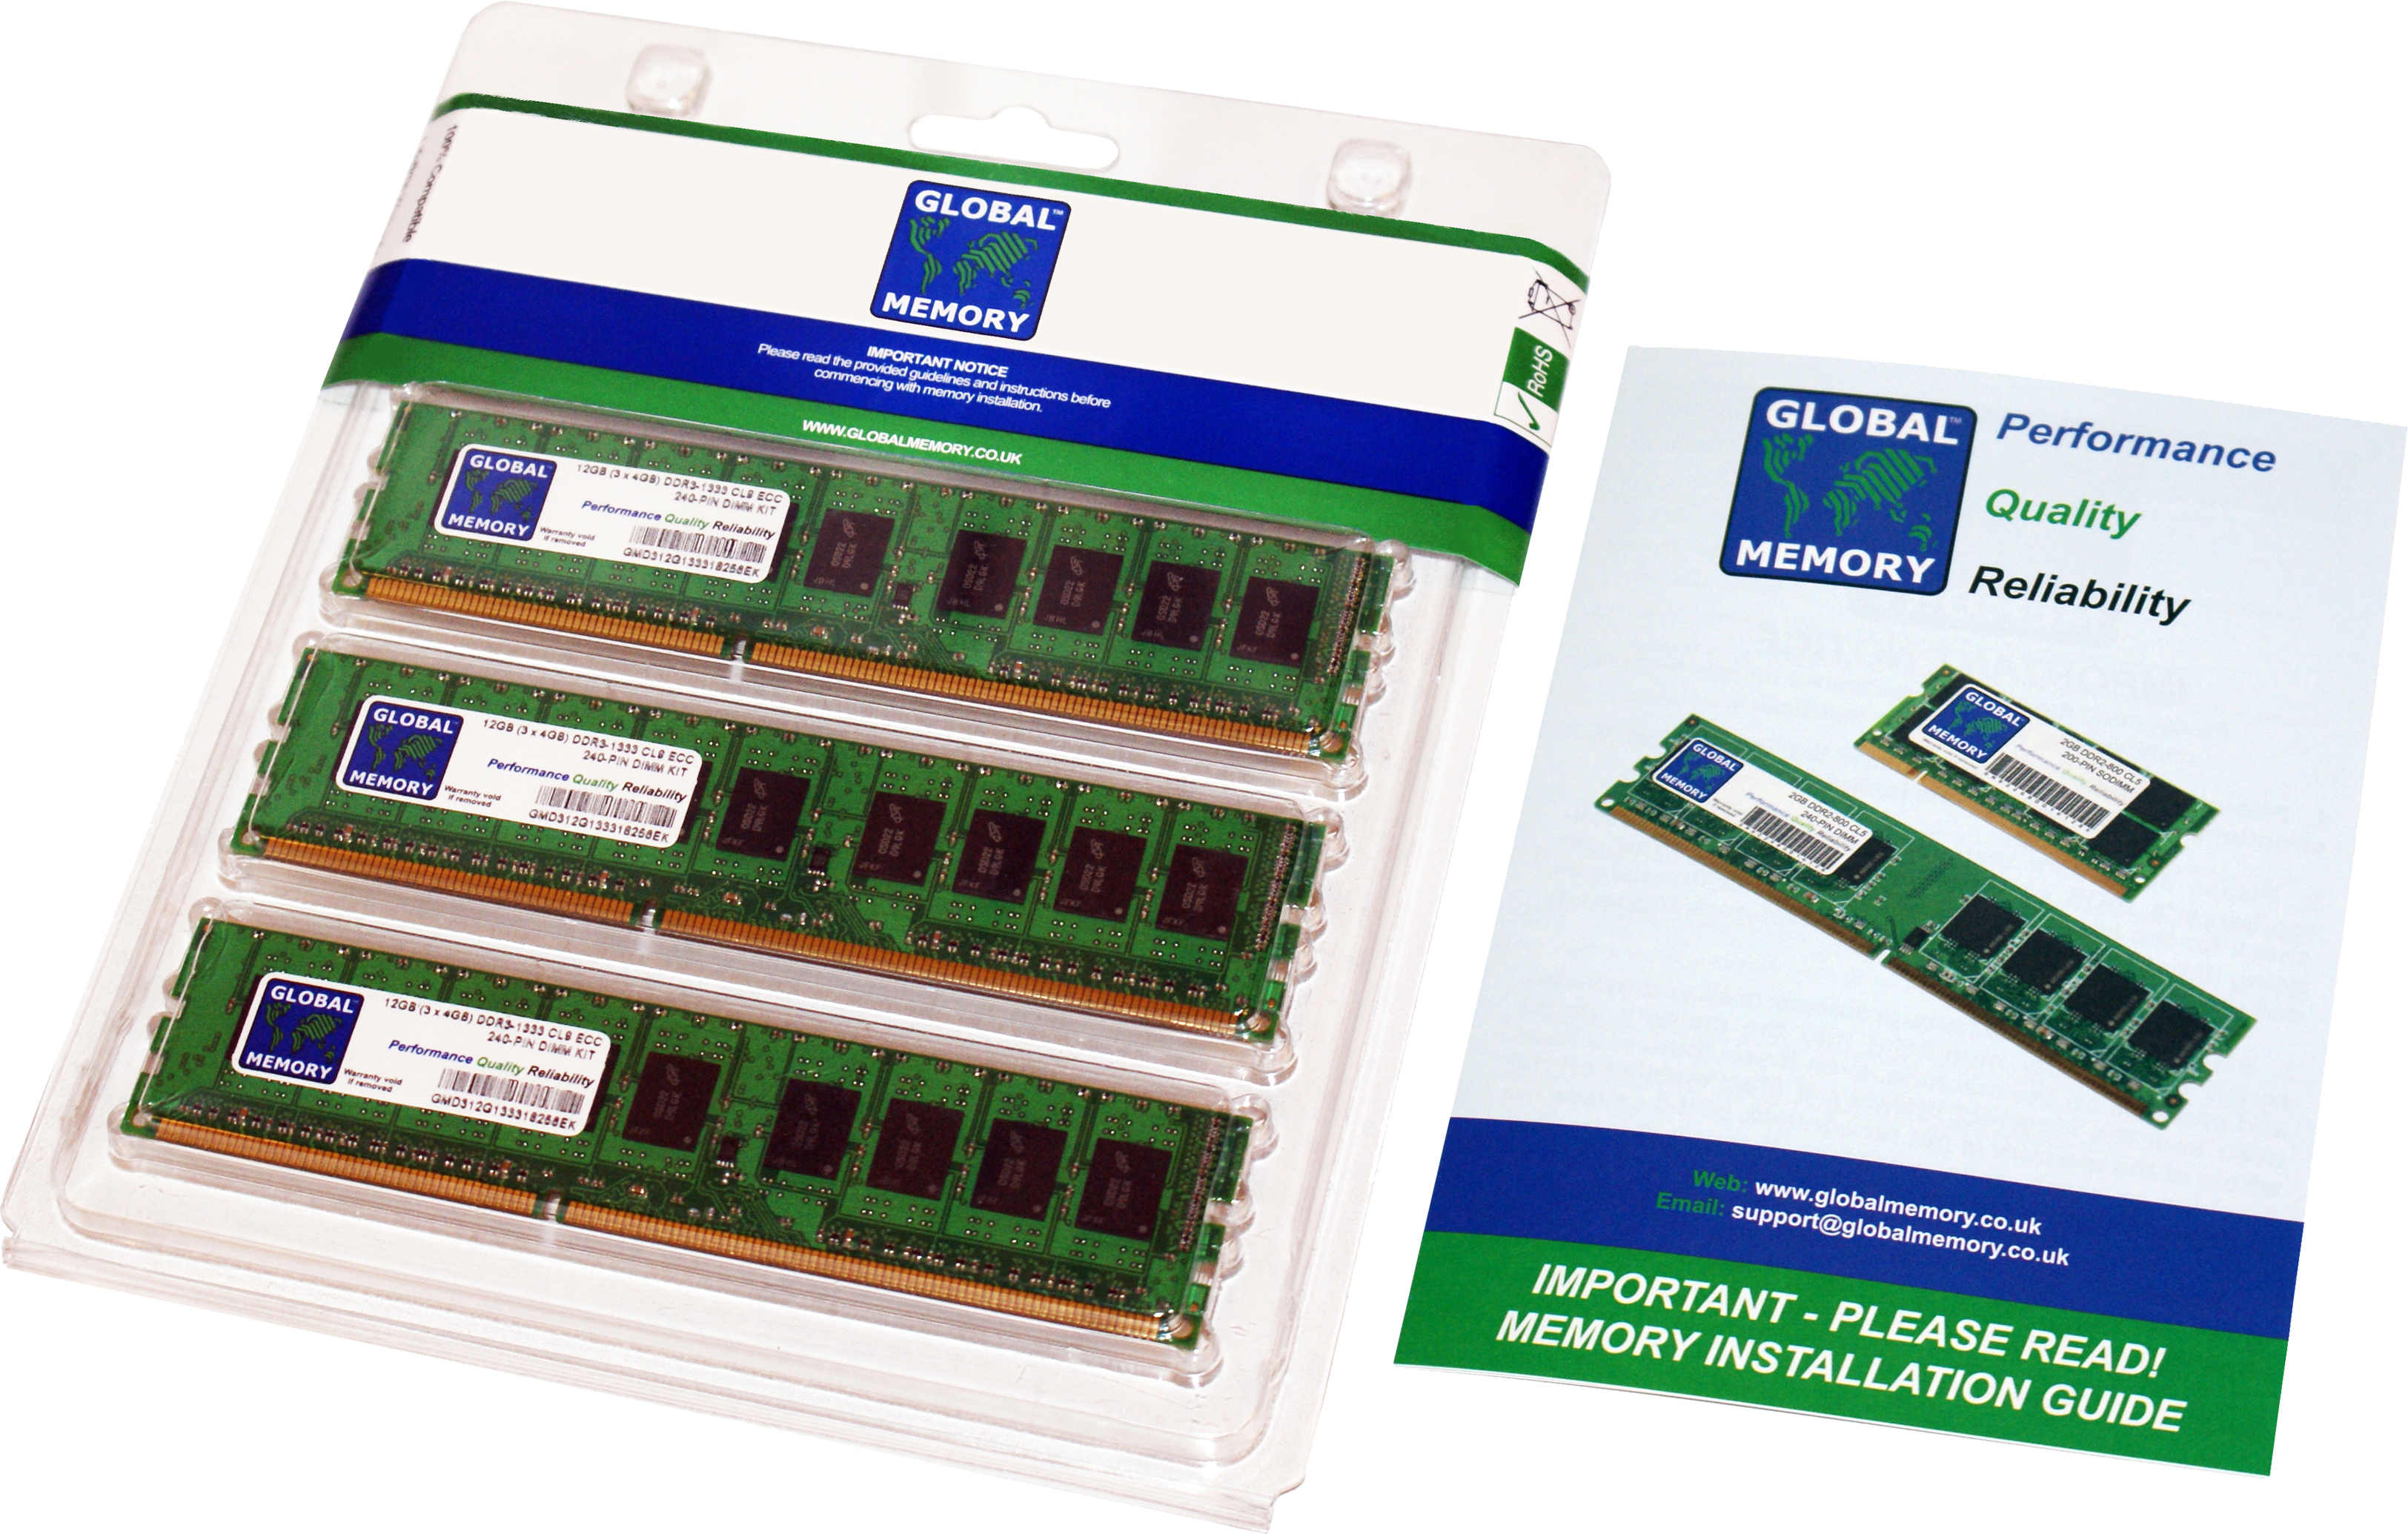 24GB (3 x 8GB) DDR3 1866MHz PC3-14900 240-PIN ECC DIMM (UDIMM) MEMORY RAM KIT FOR LENOVO SERVERS/WORKSTATIONS